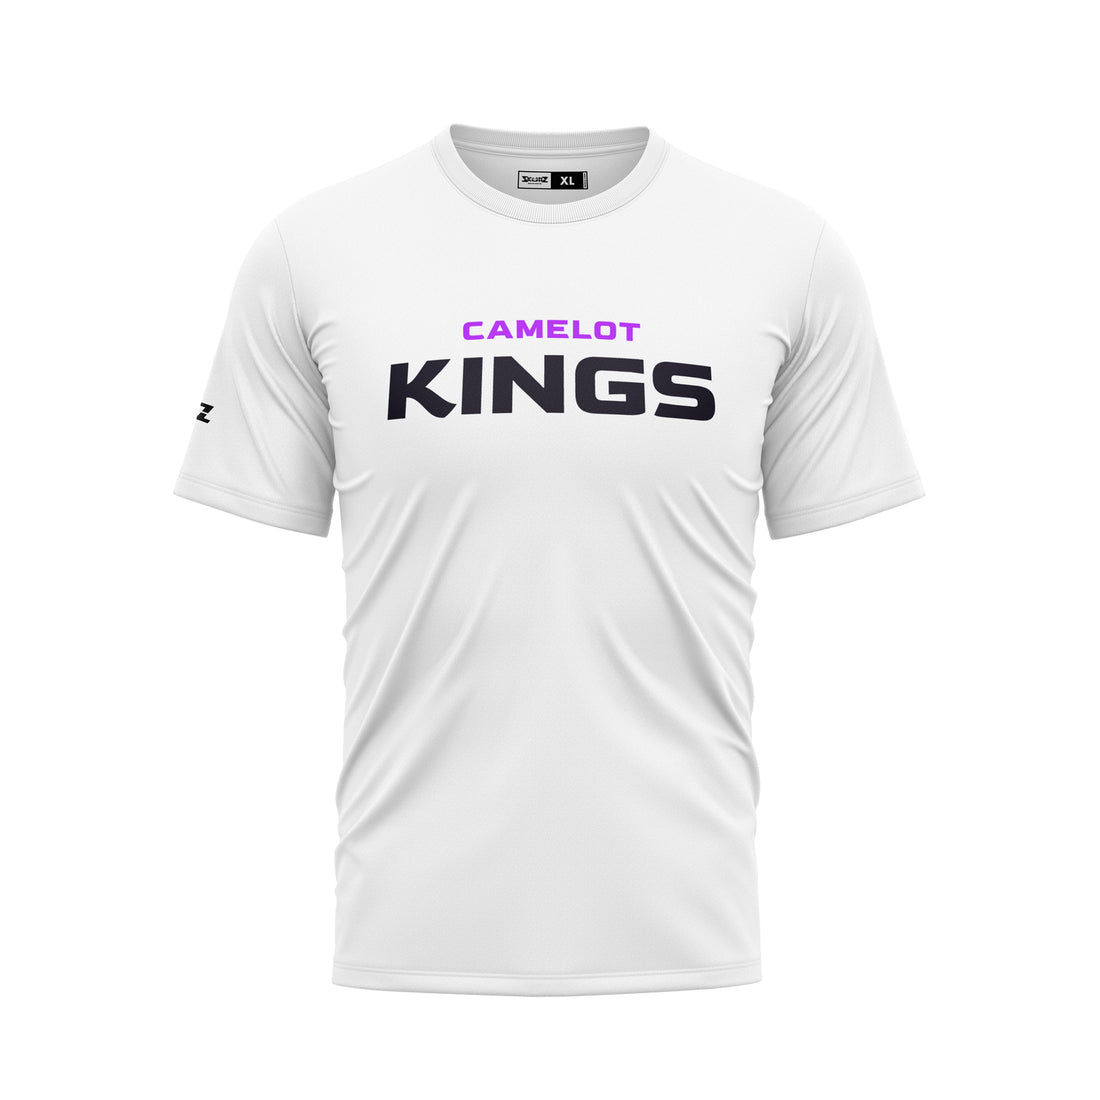 Camelot Kings Logo Shirt